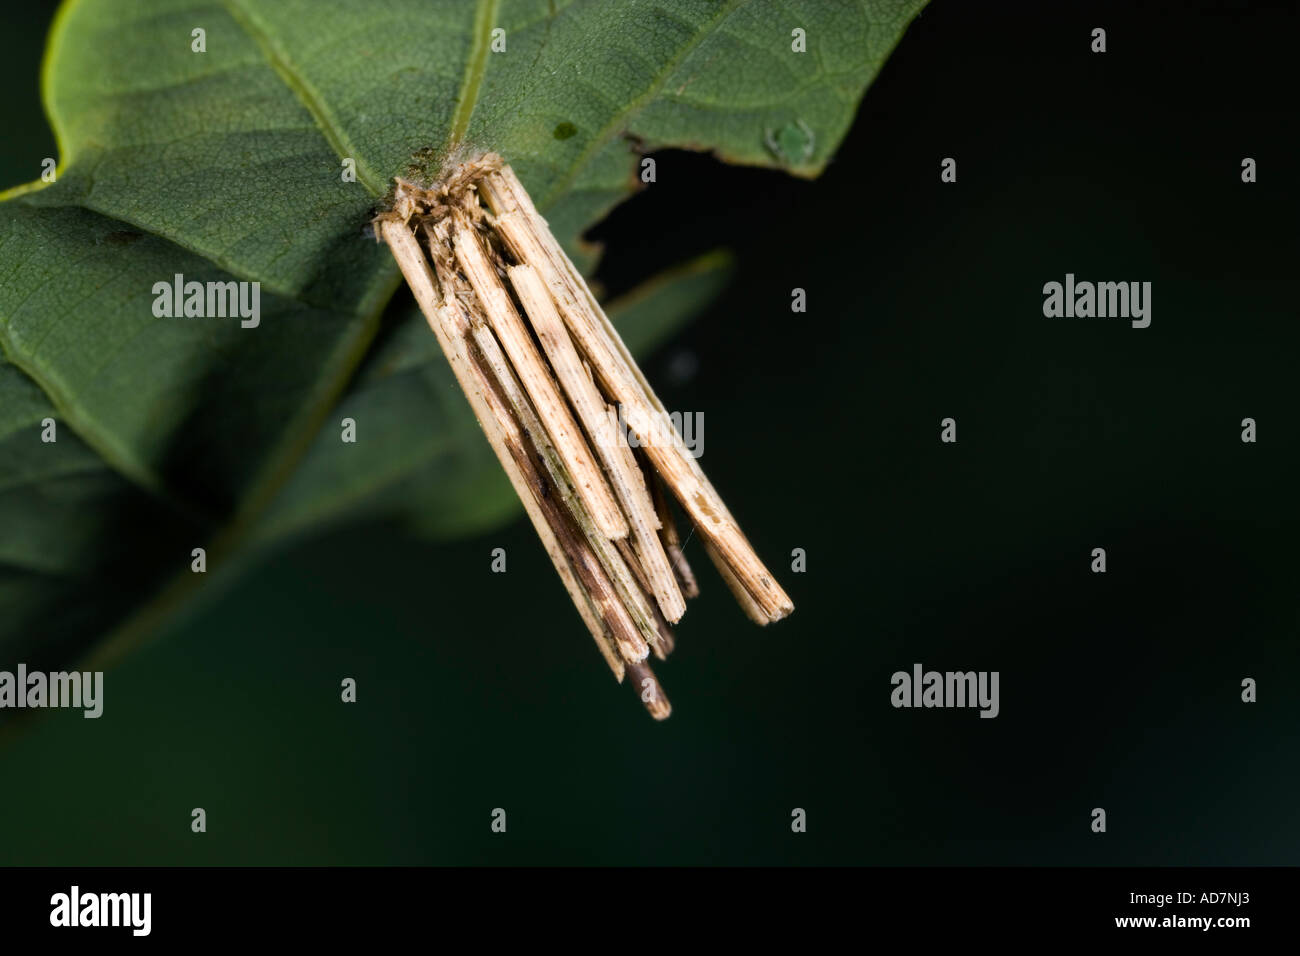 Psyche casta larval case on oak leaf with nice defuse background potton bedfordshire Stock Photo